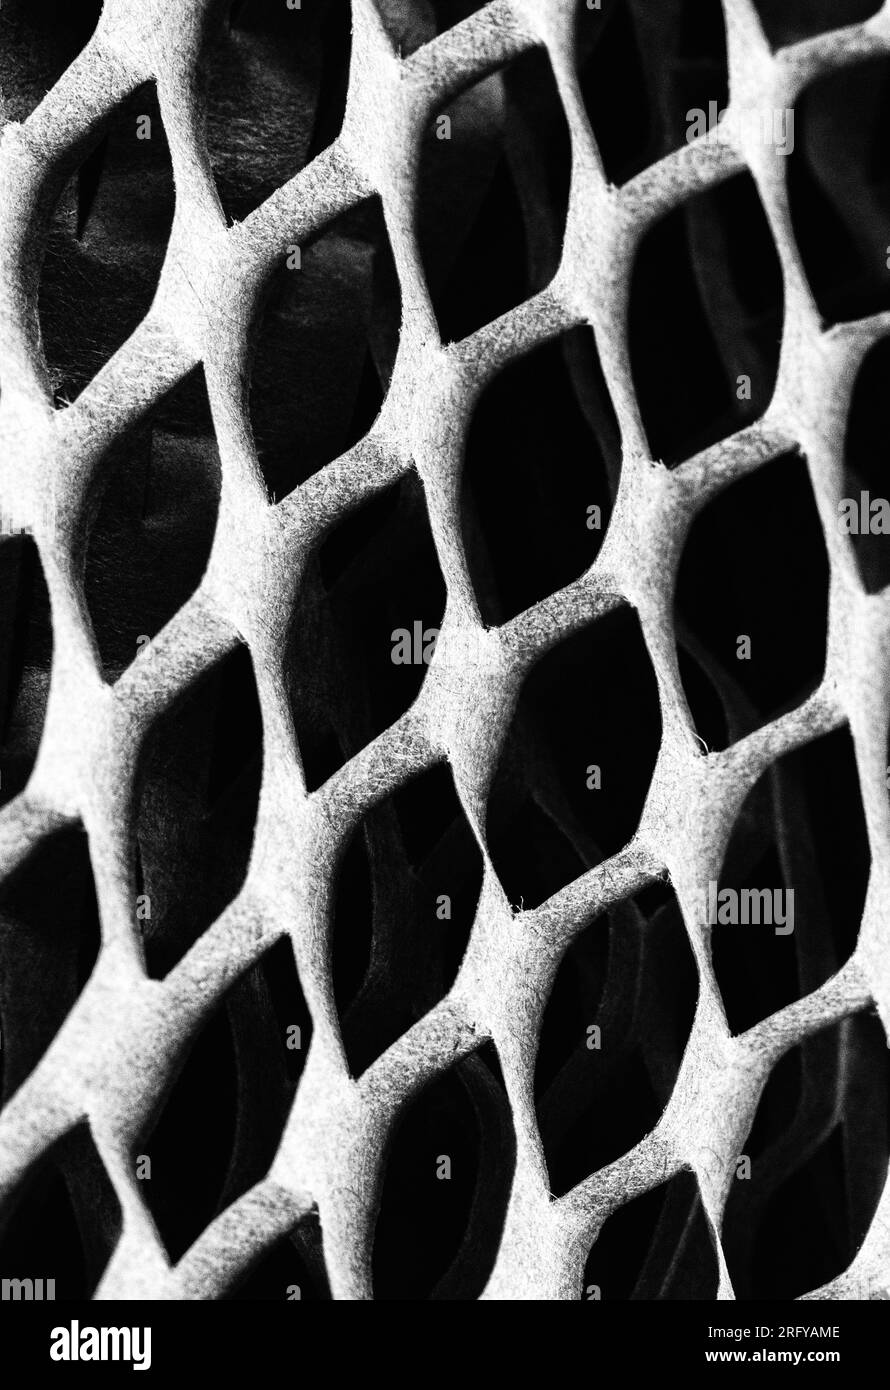 Honeycomb packing paper creates geometric patterns Stock Photo